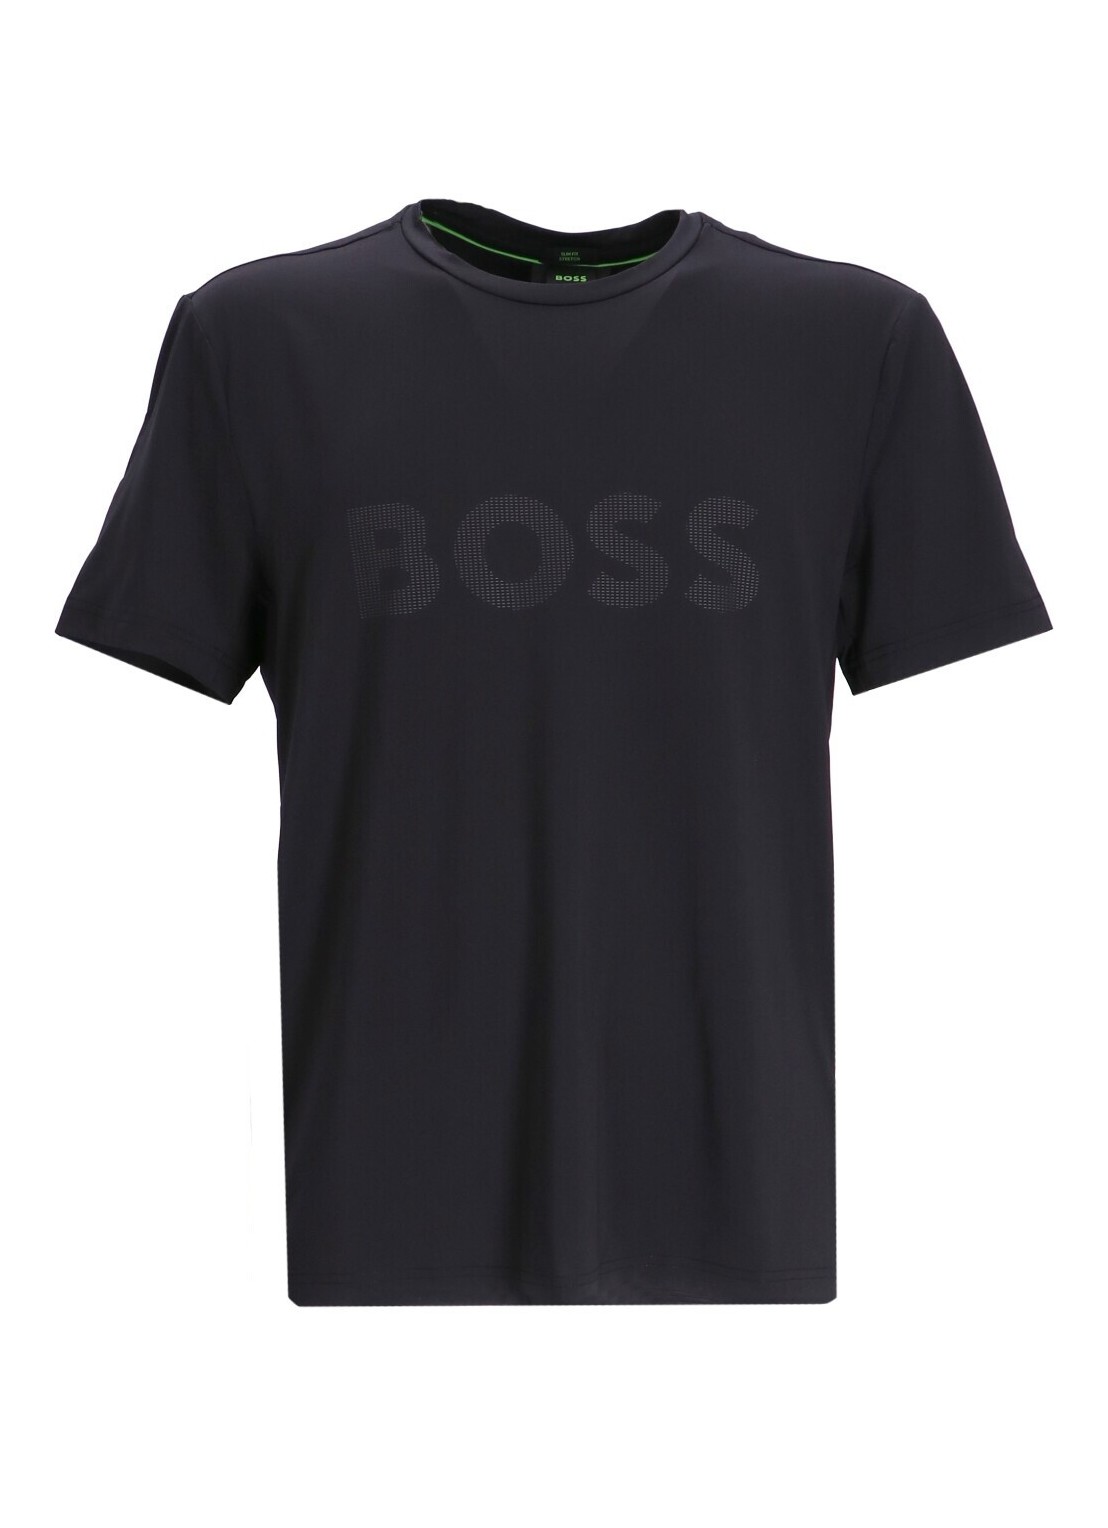 Camiseta boss t-shirt man tee active 50494339 001 talla L
 